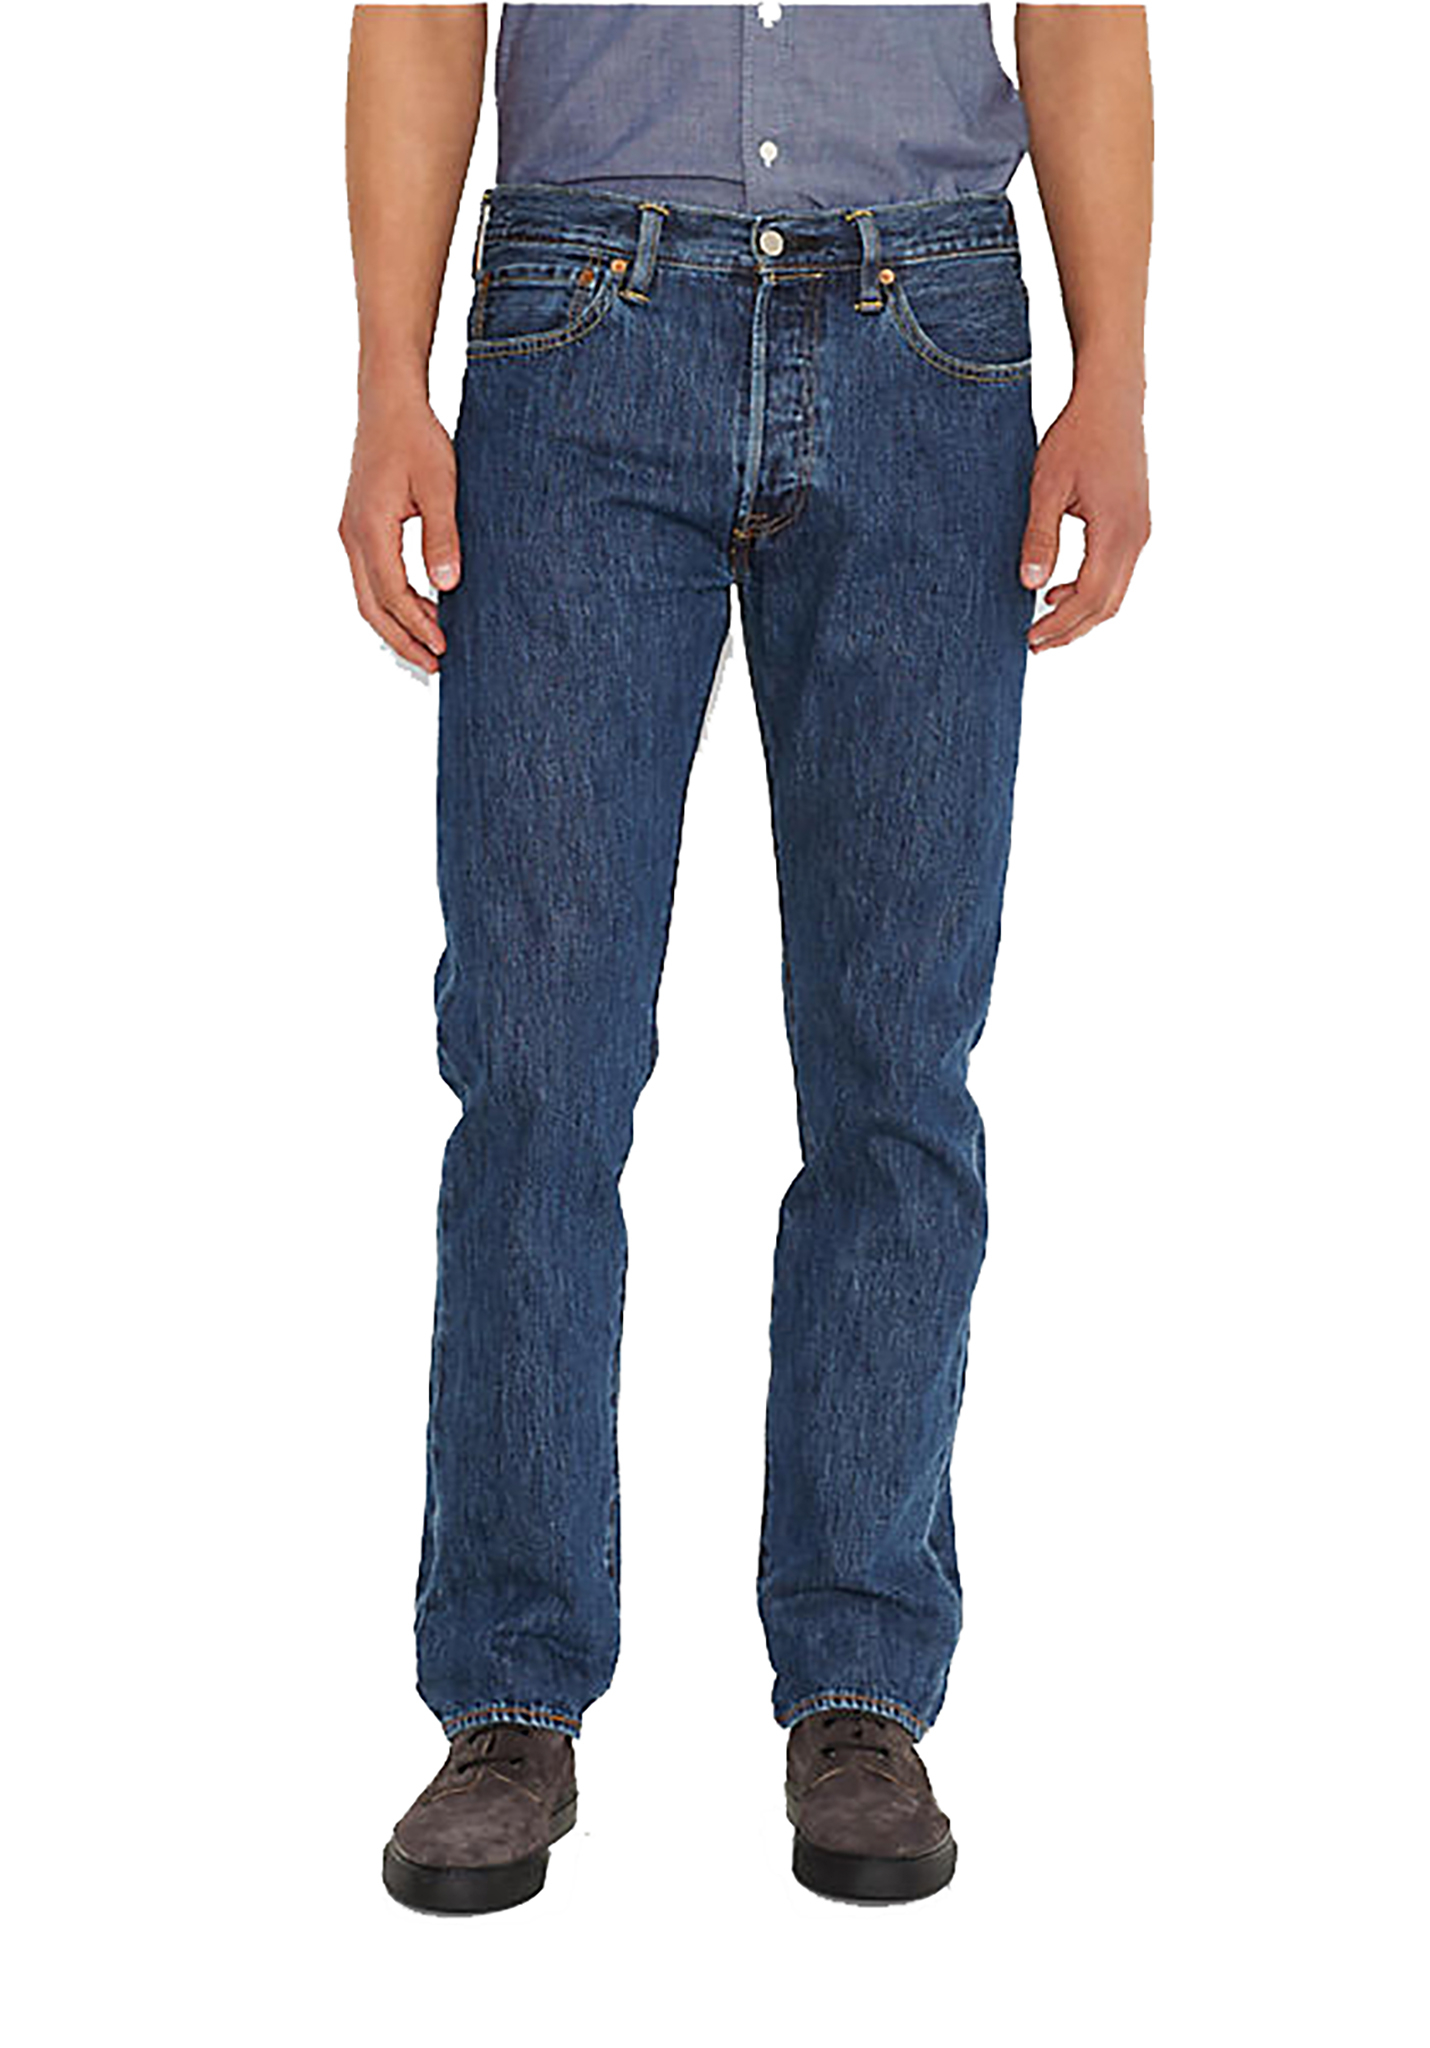 Levis 501 Original Jeans stonewash 38/32